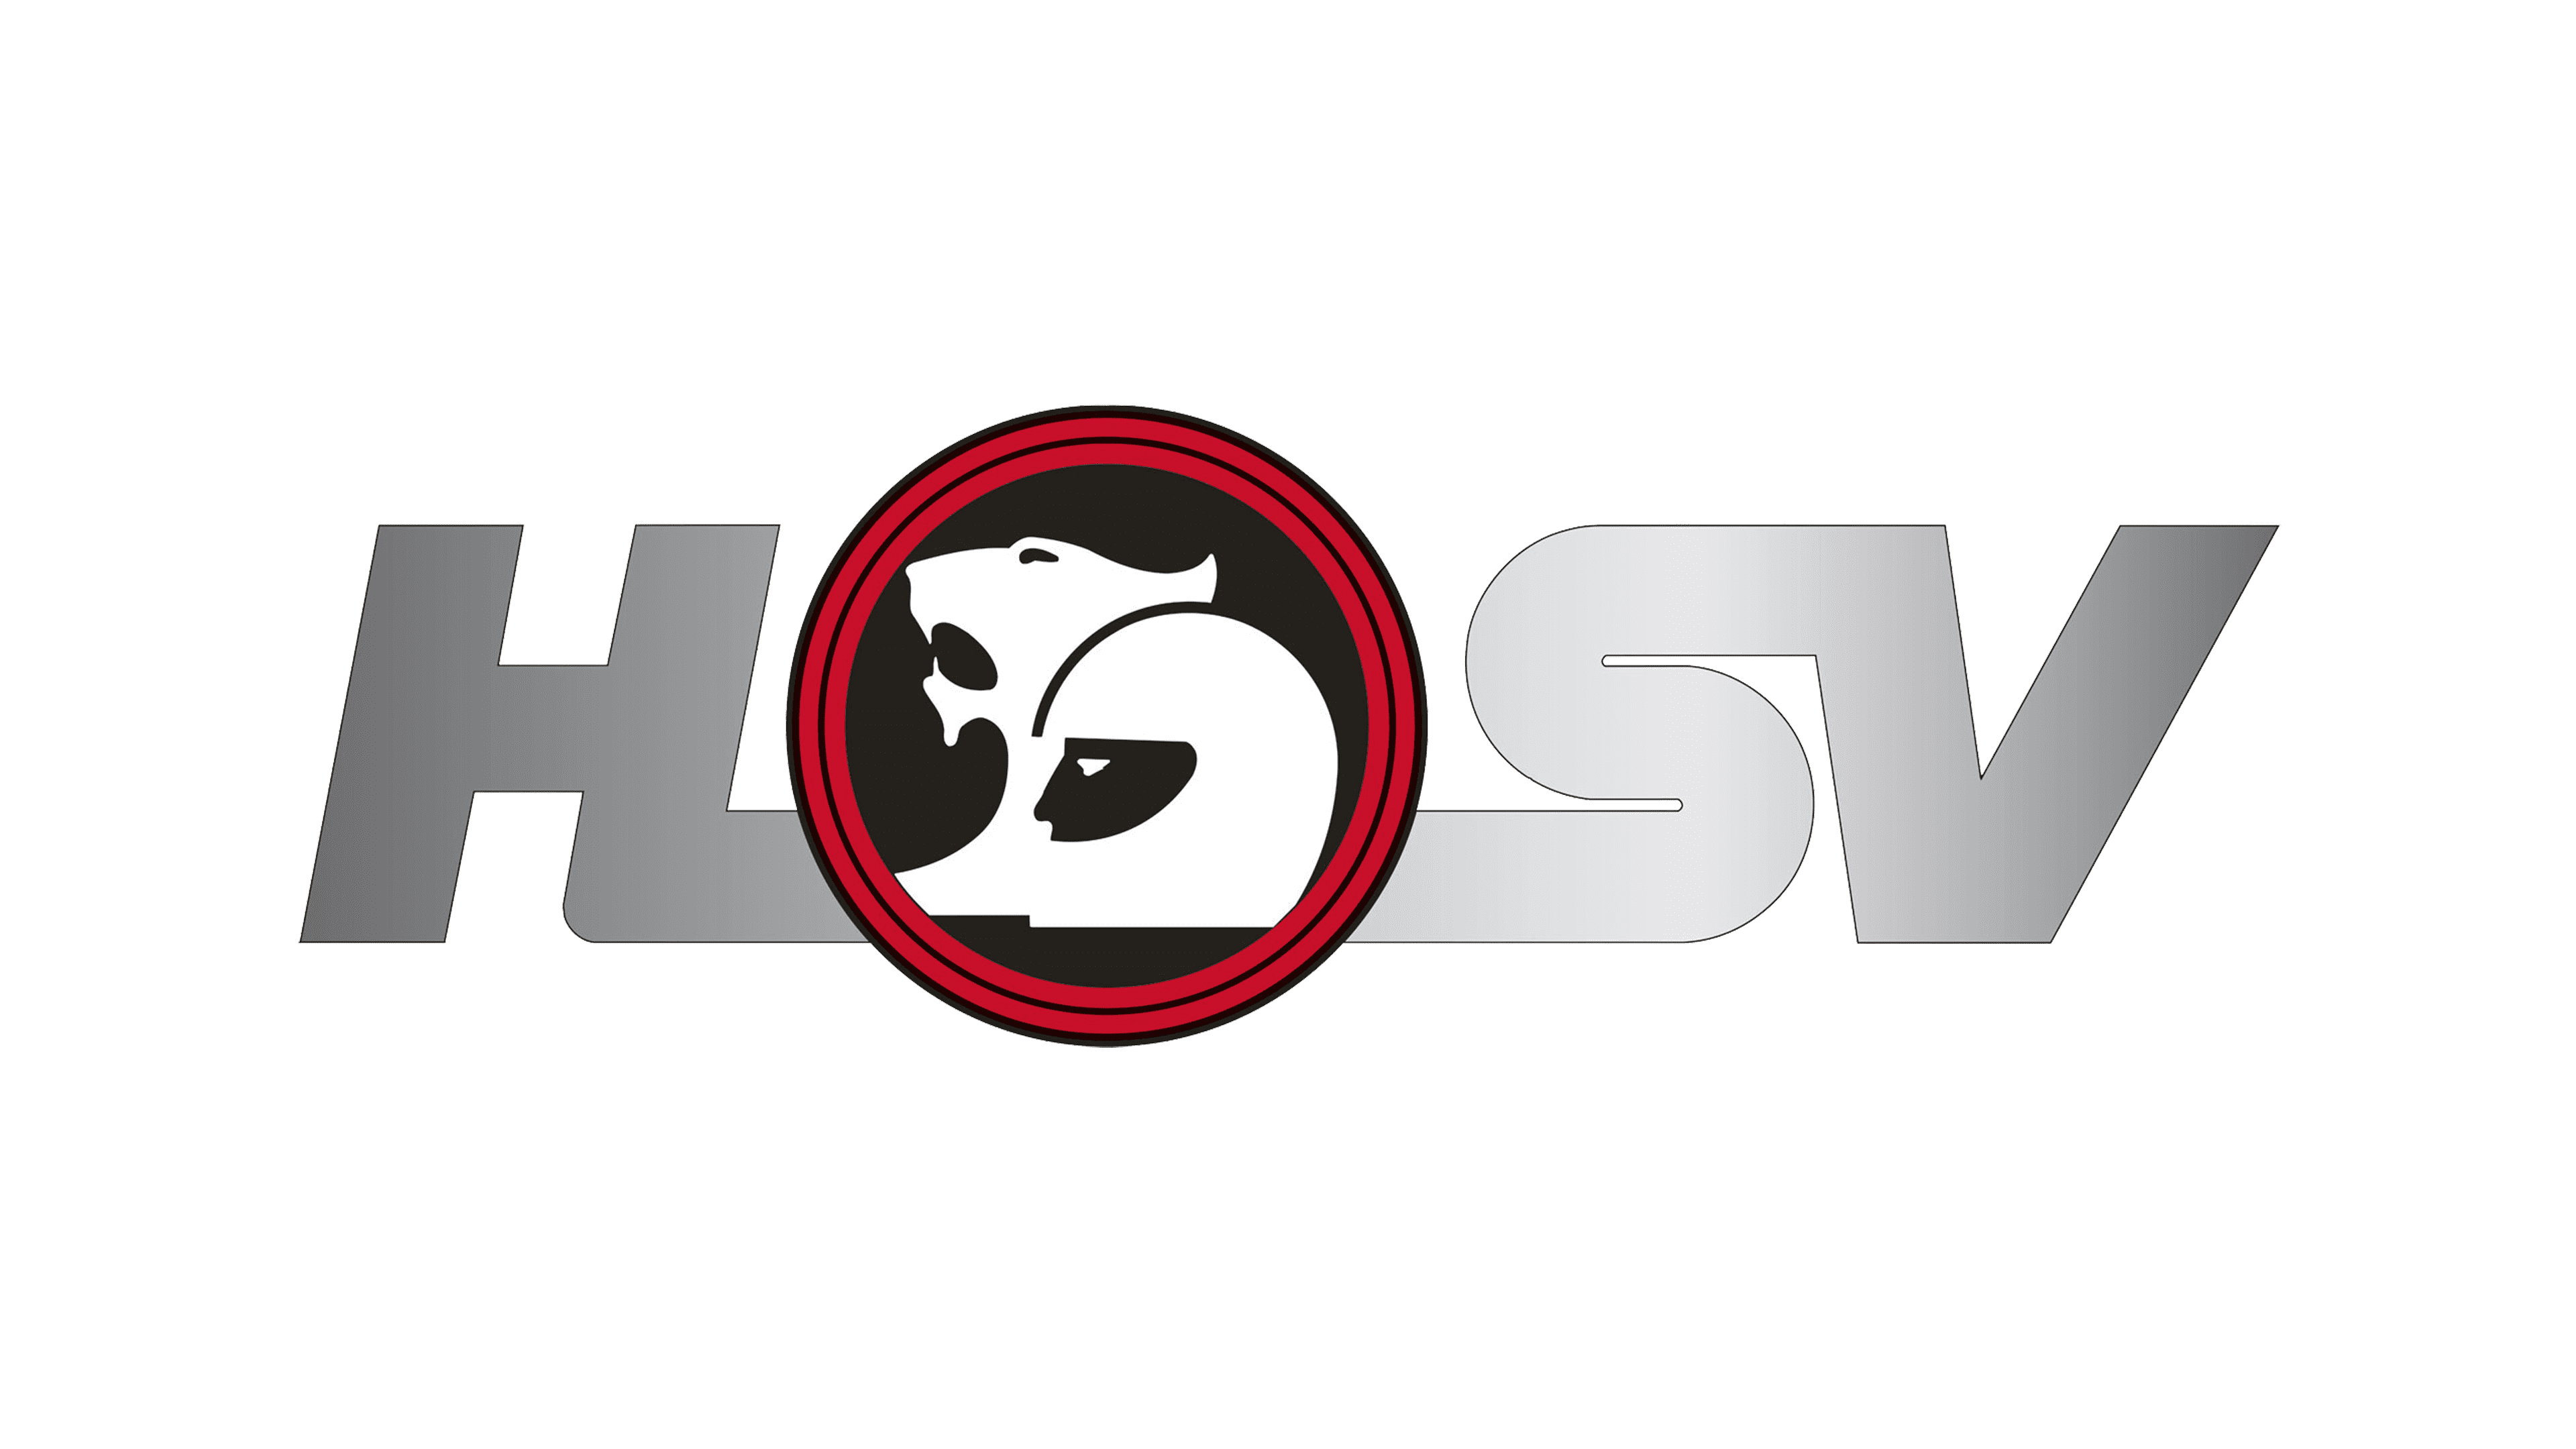 HSV logo PNG